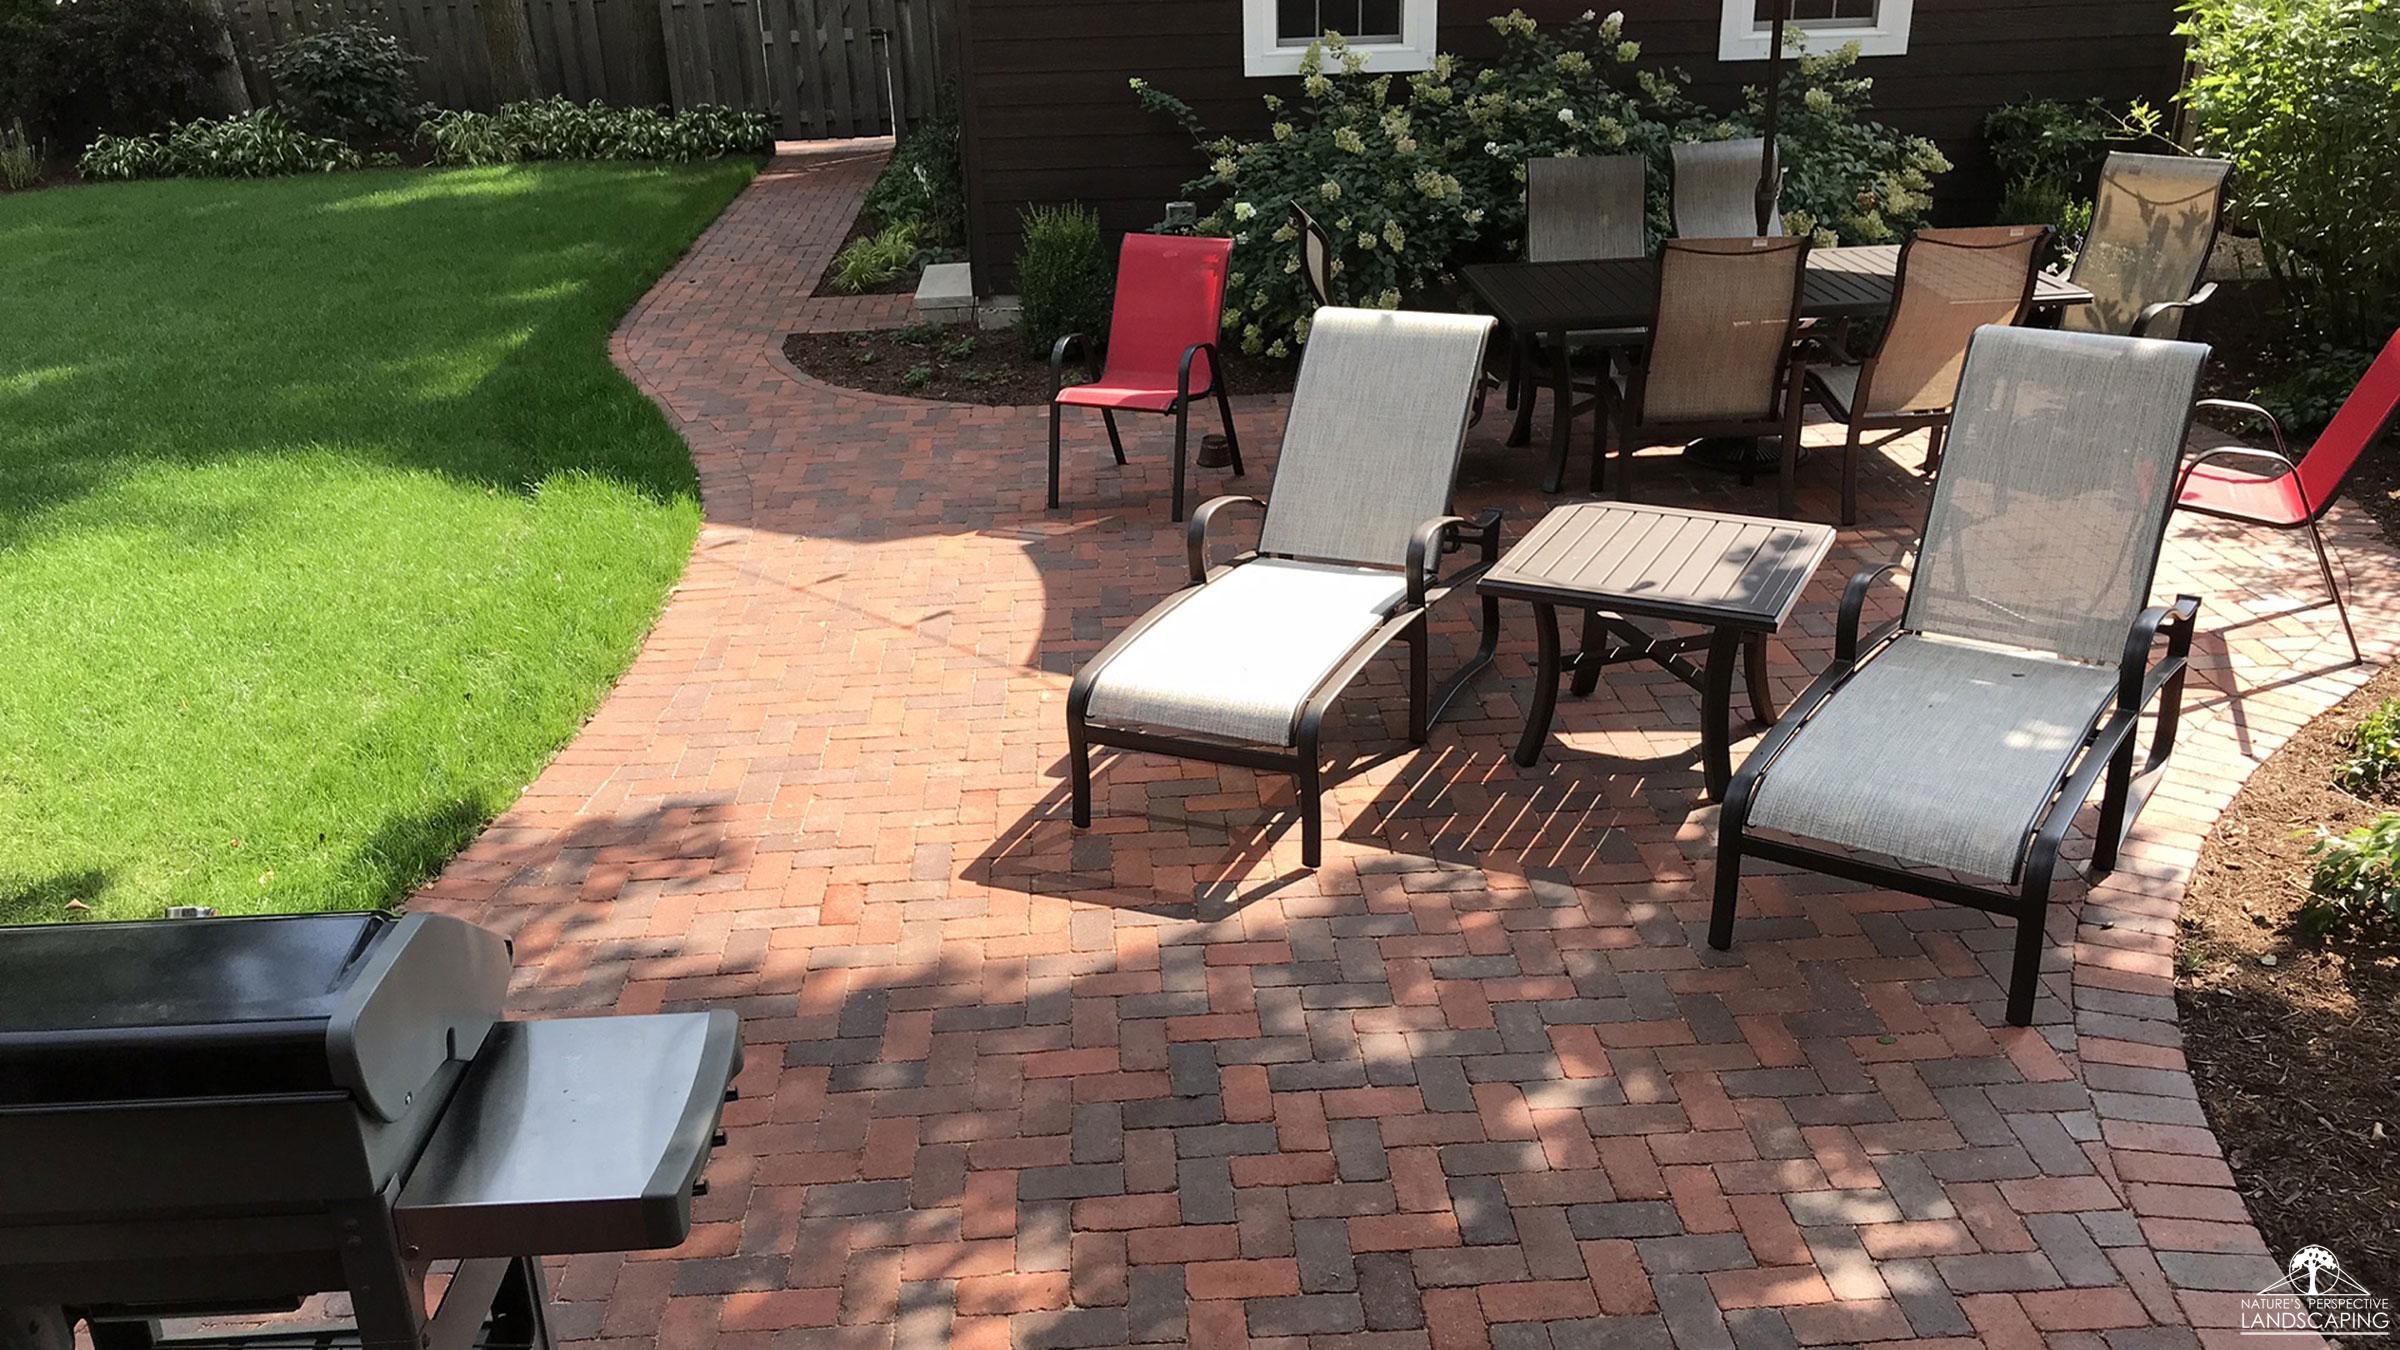 clay paver patio in backyard